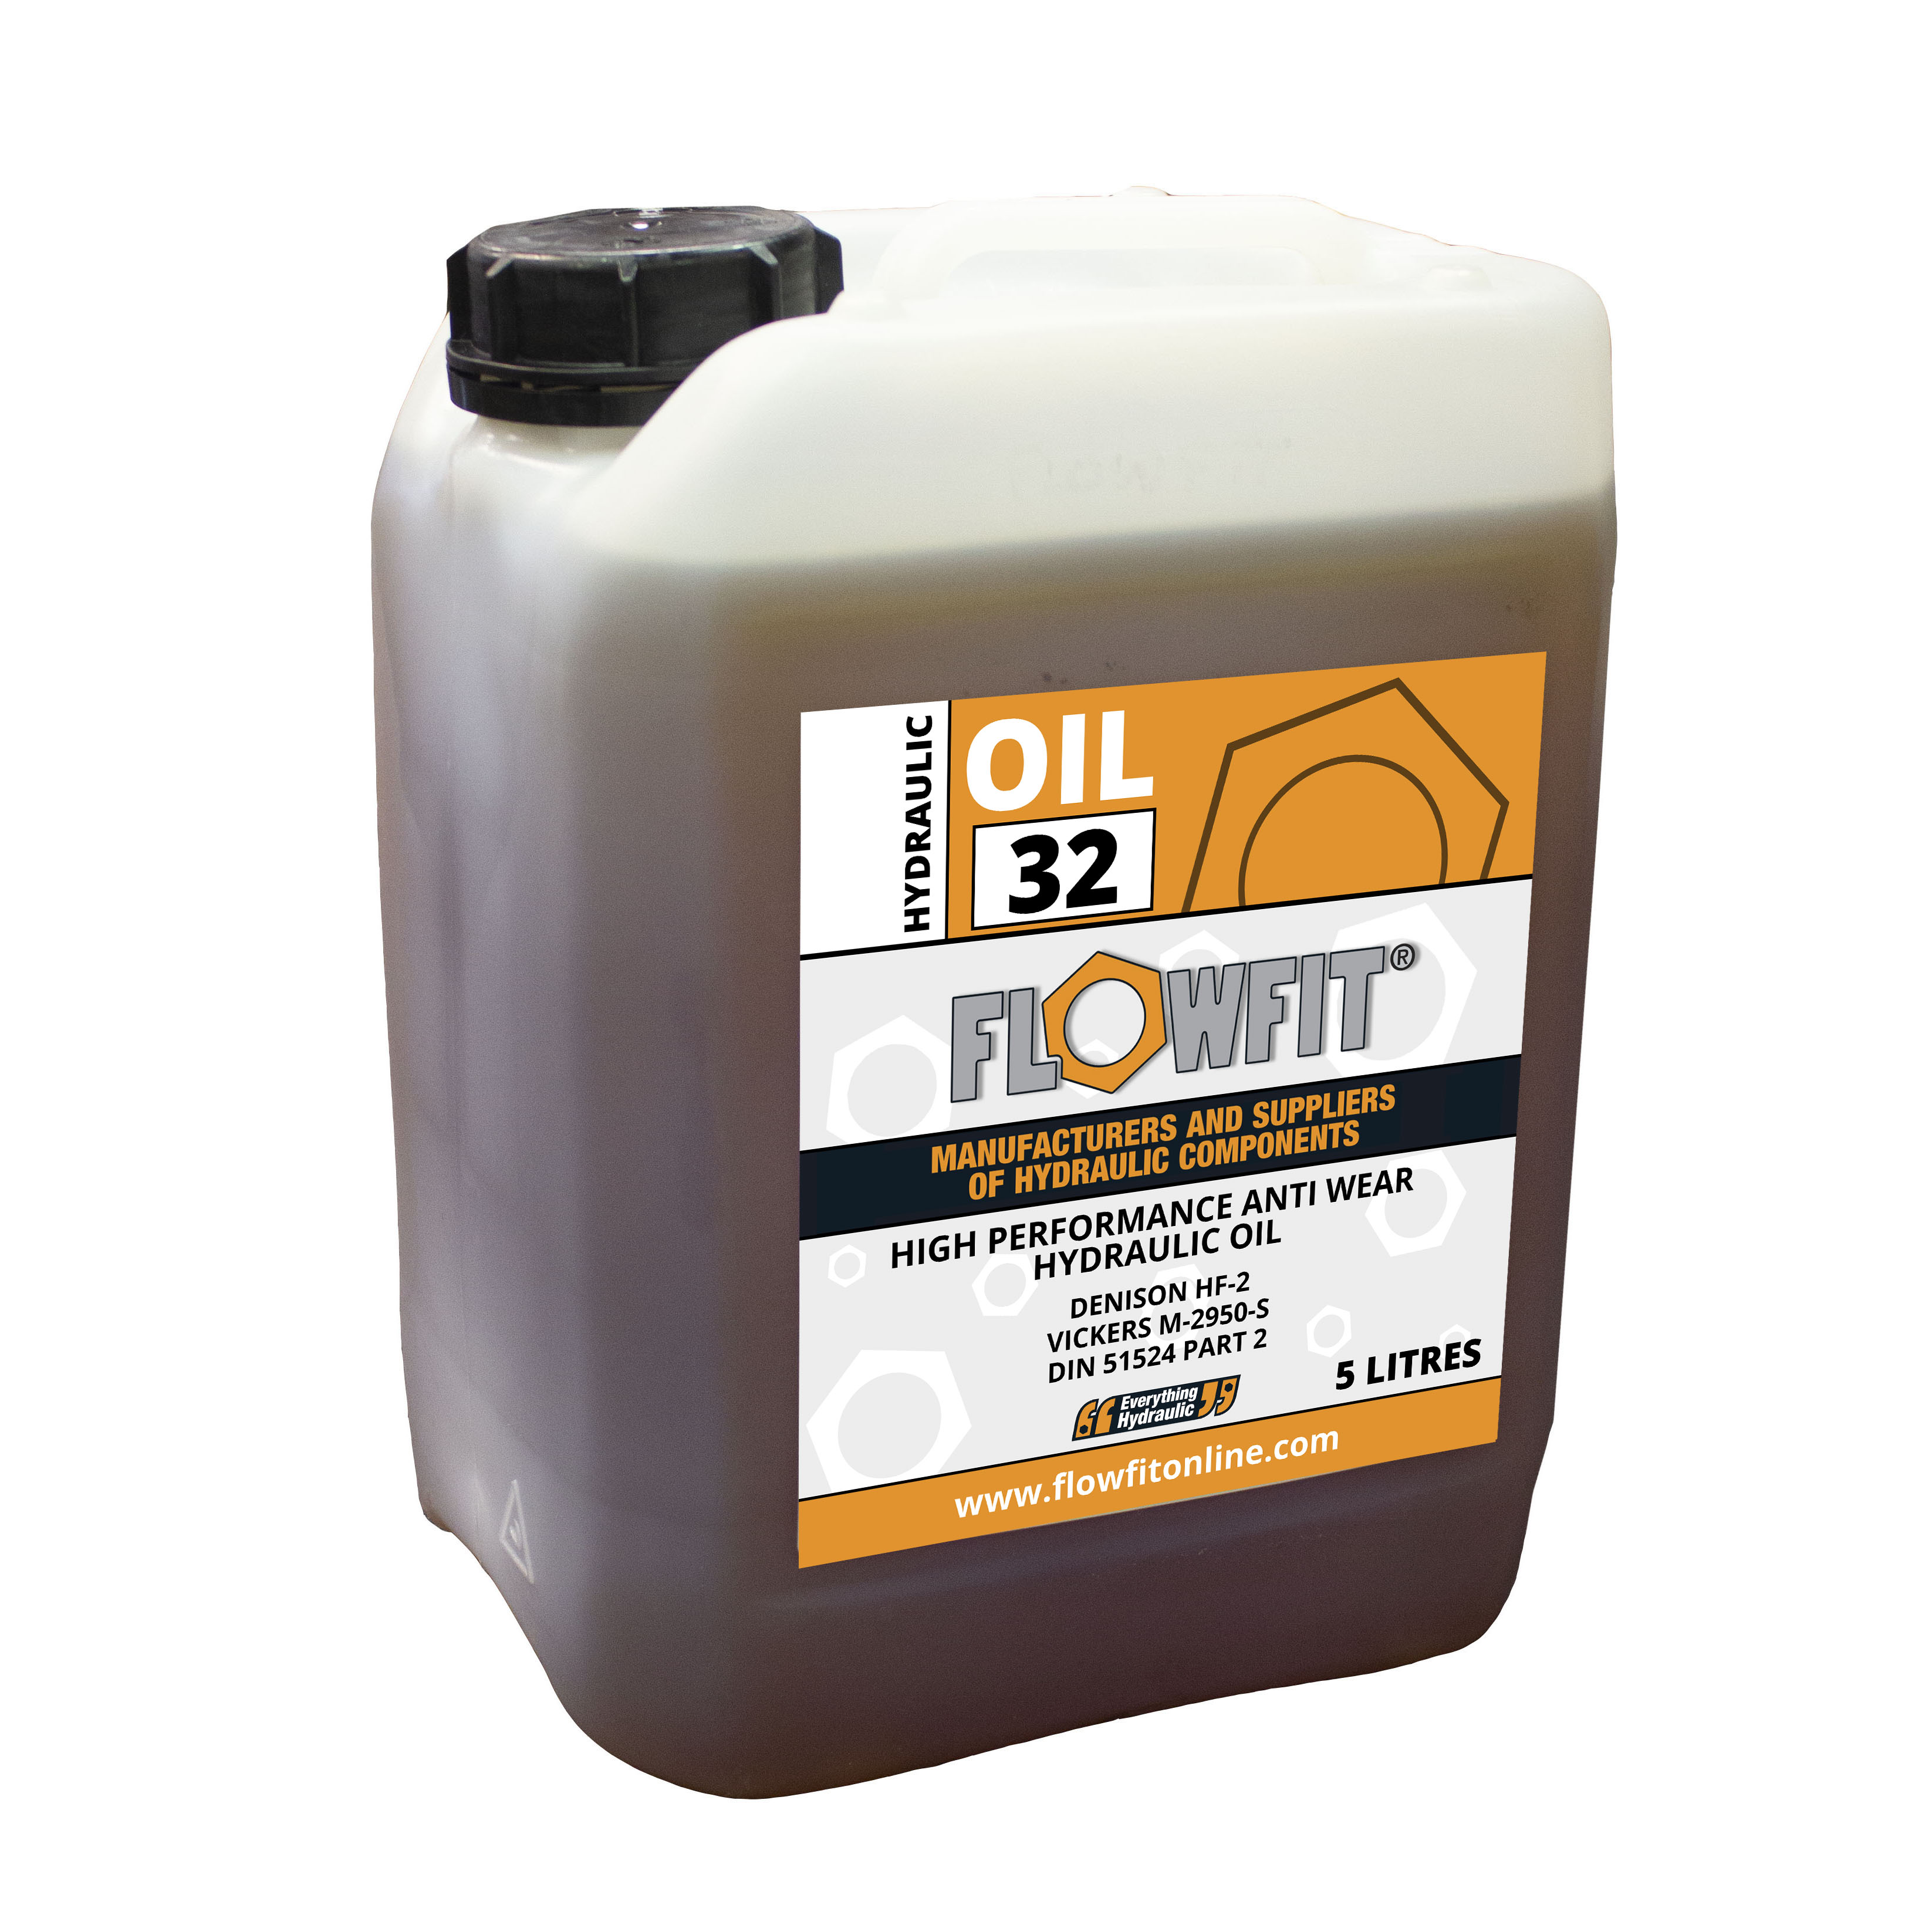 Flowfit Hydraulic Oil, ISO 32, 5 Litre